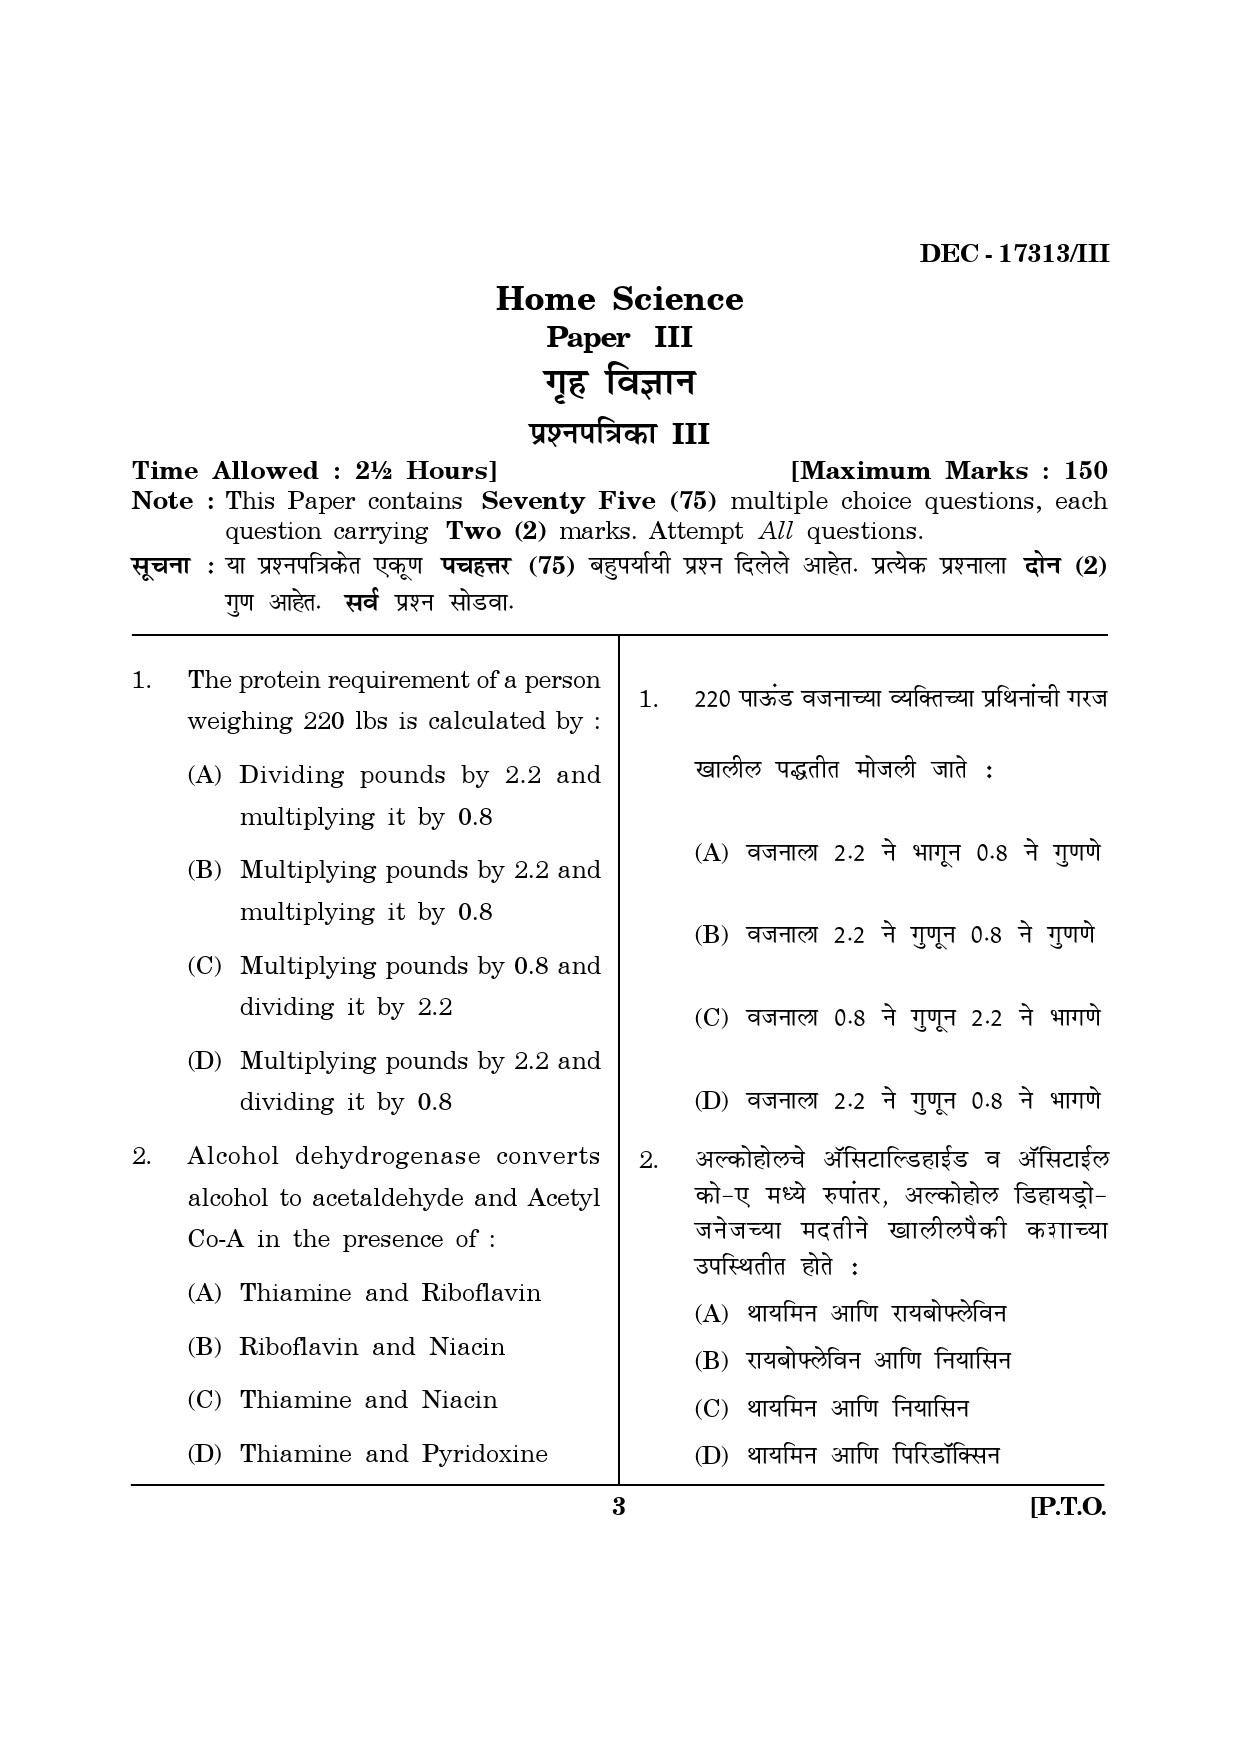 Maharashtra SET Home Science Question Paper III December 2013 2